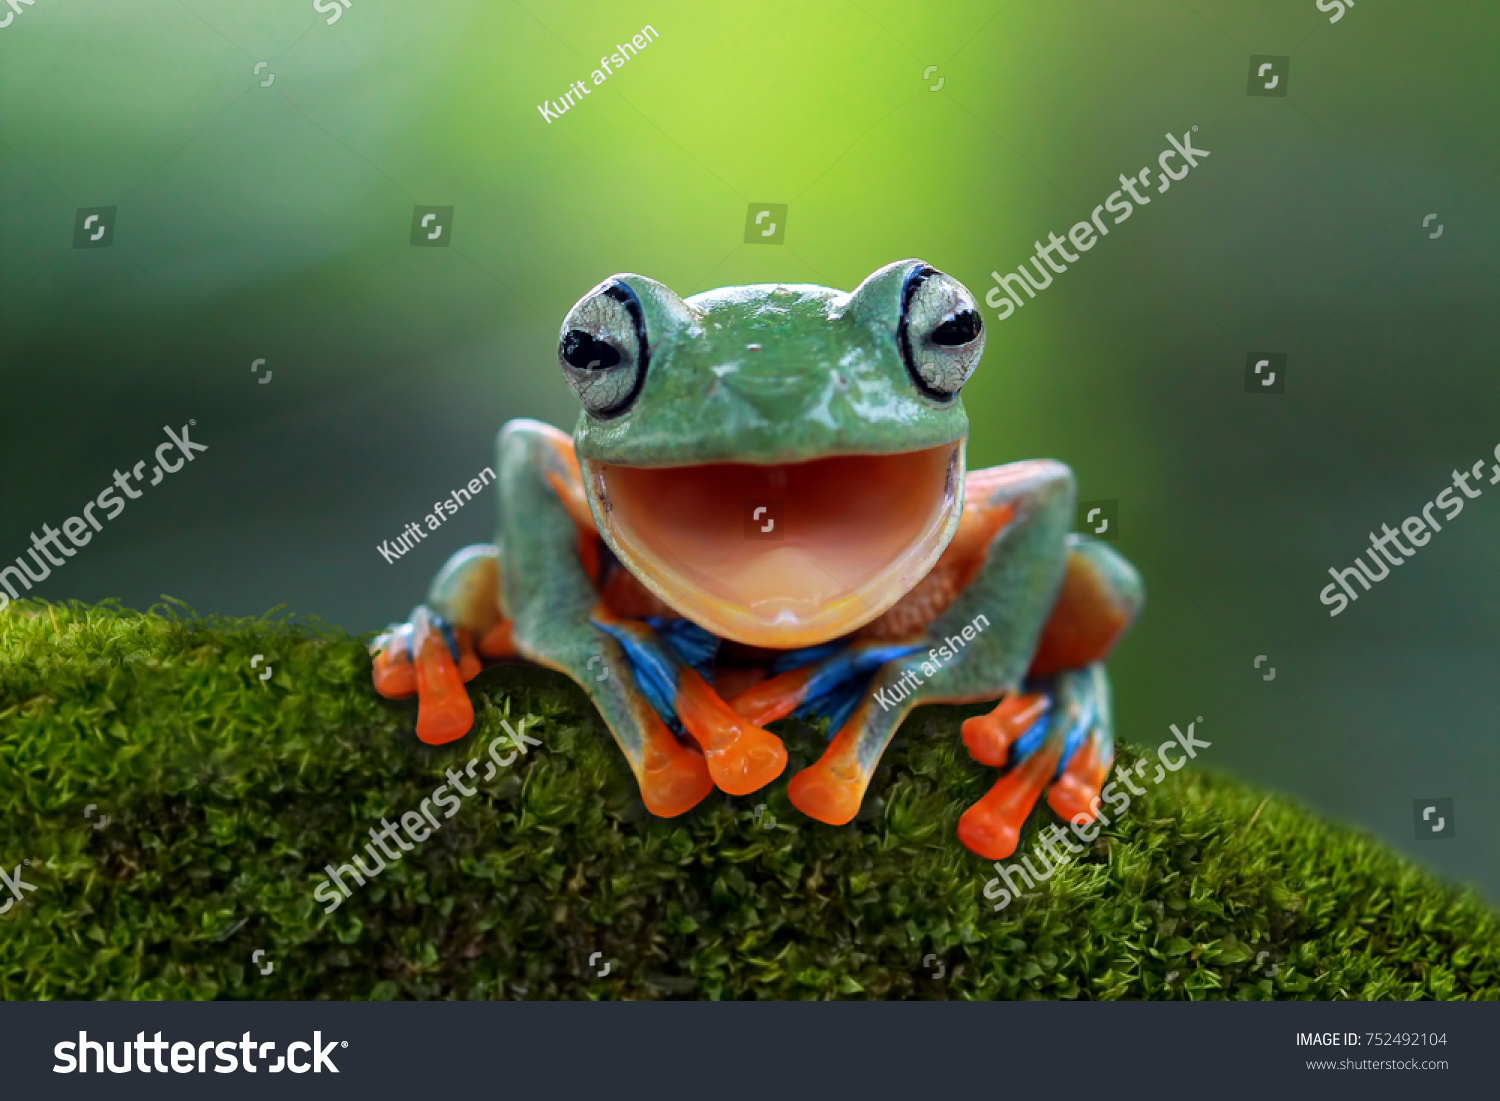 Tree frog, Flying frog laughing, animal closeup #752492104